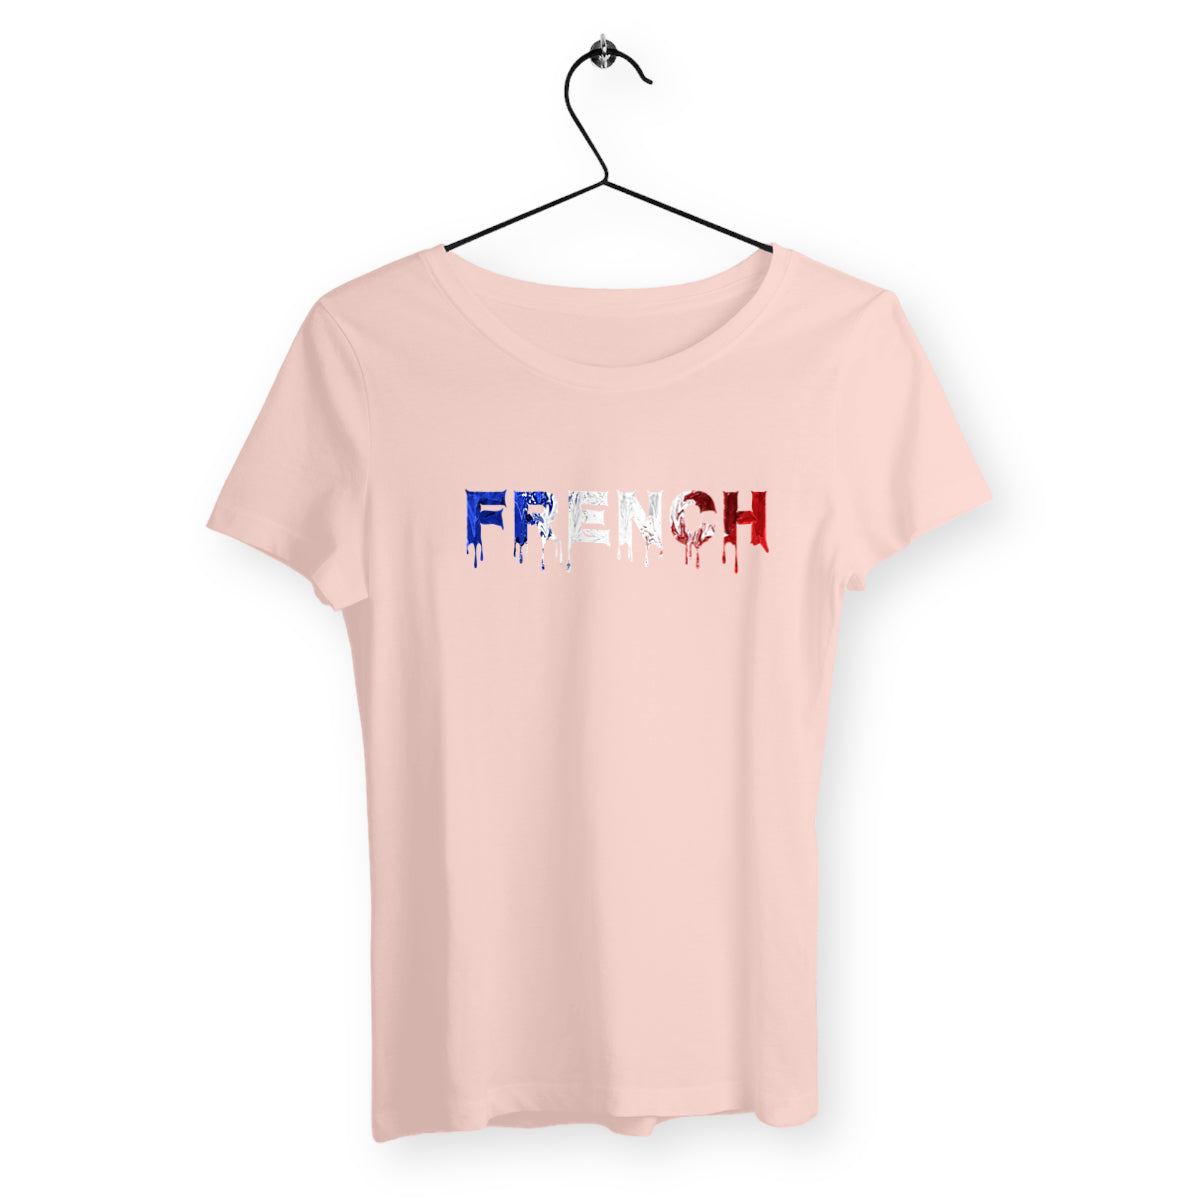 T-Shirt Femme Bio - Peinture French, t-shirt femme coton bio noir peinture french T-French, t-shirt french, t-shirt french touch femme, tee shirt french peinture rose